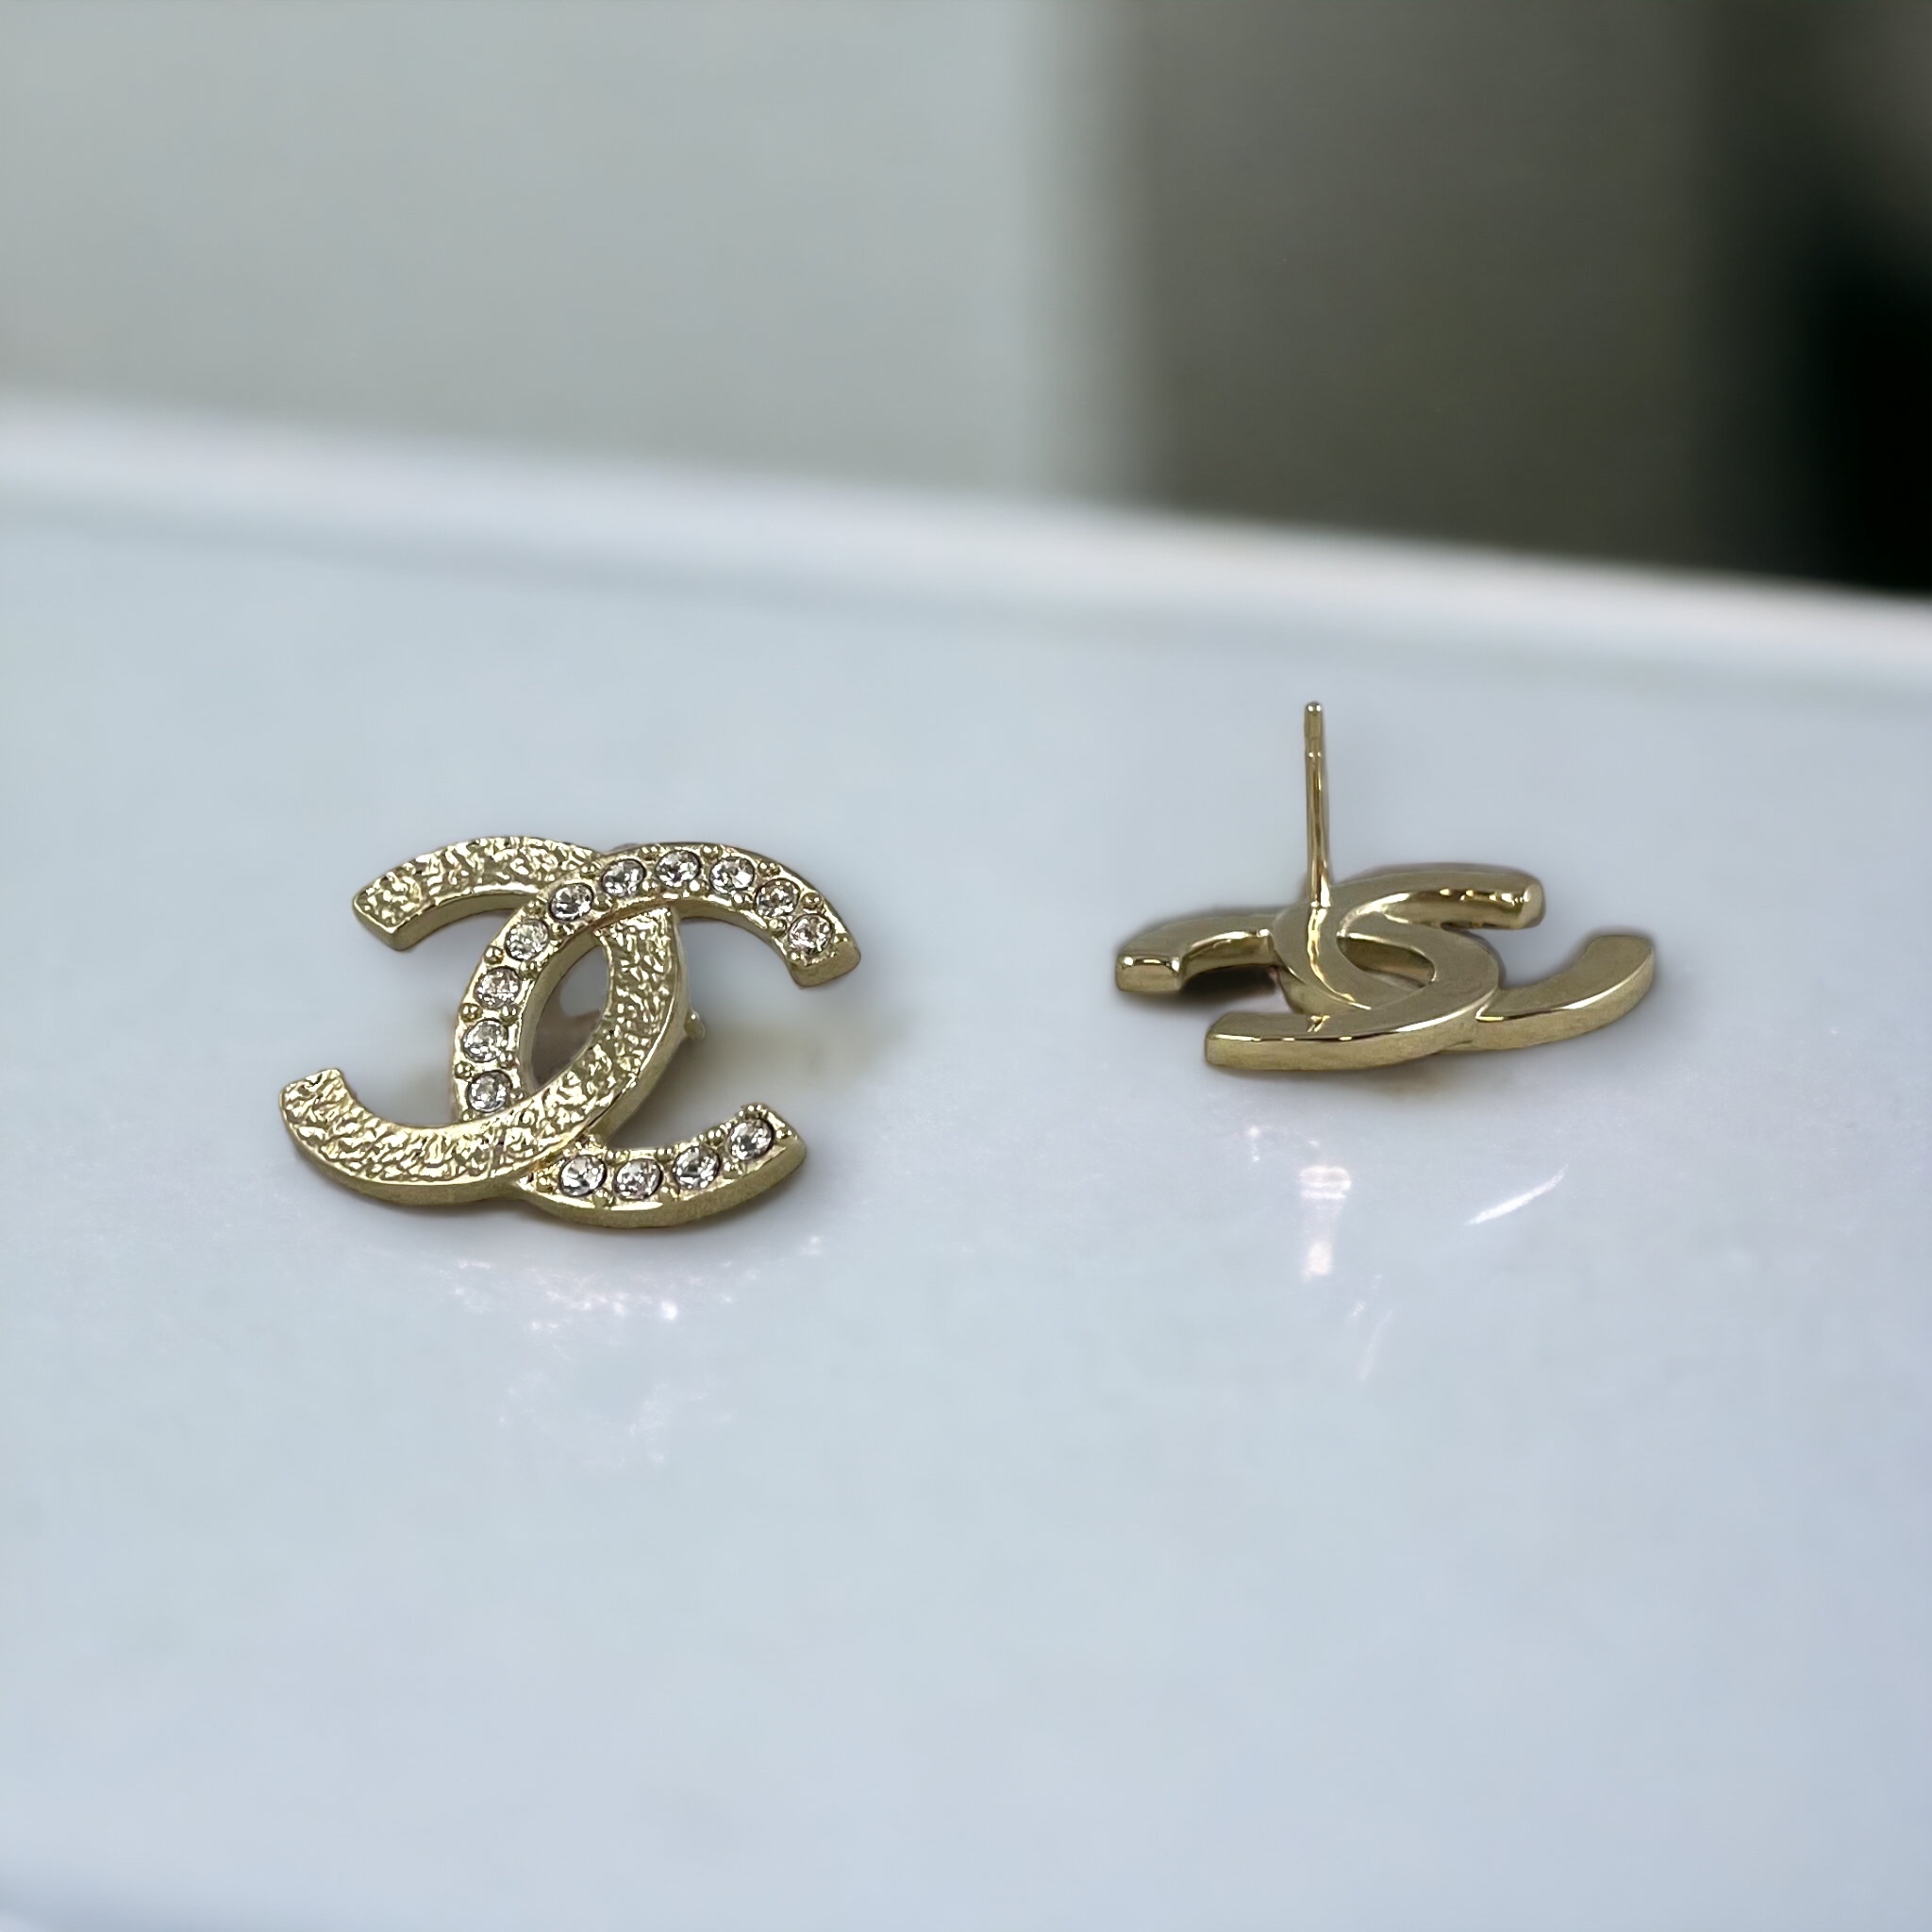 Altid Seaport forslag Chanel Strass CC Stud Earrings in Gold | MTYCI